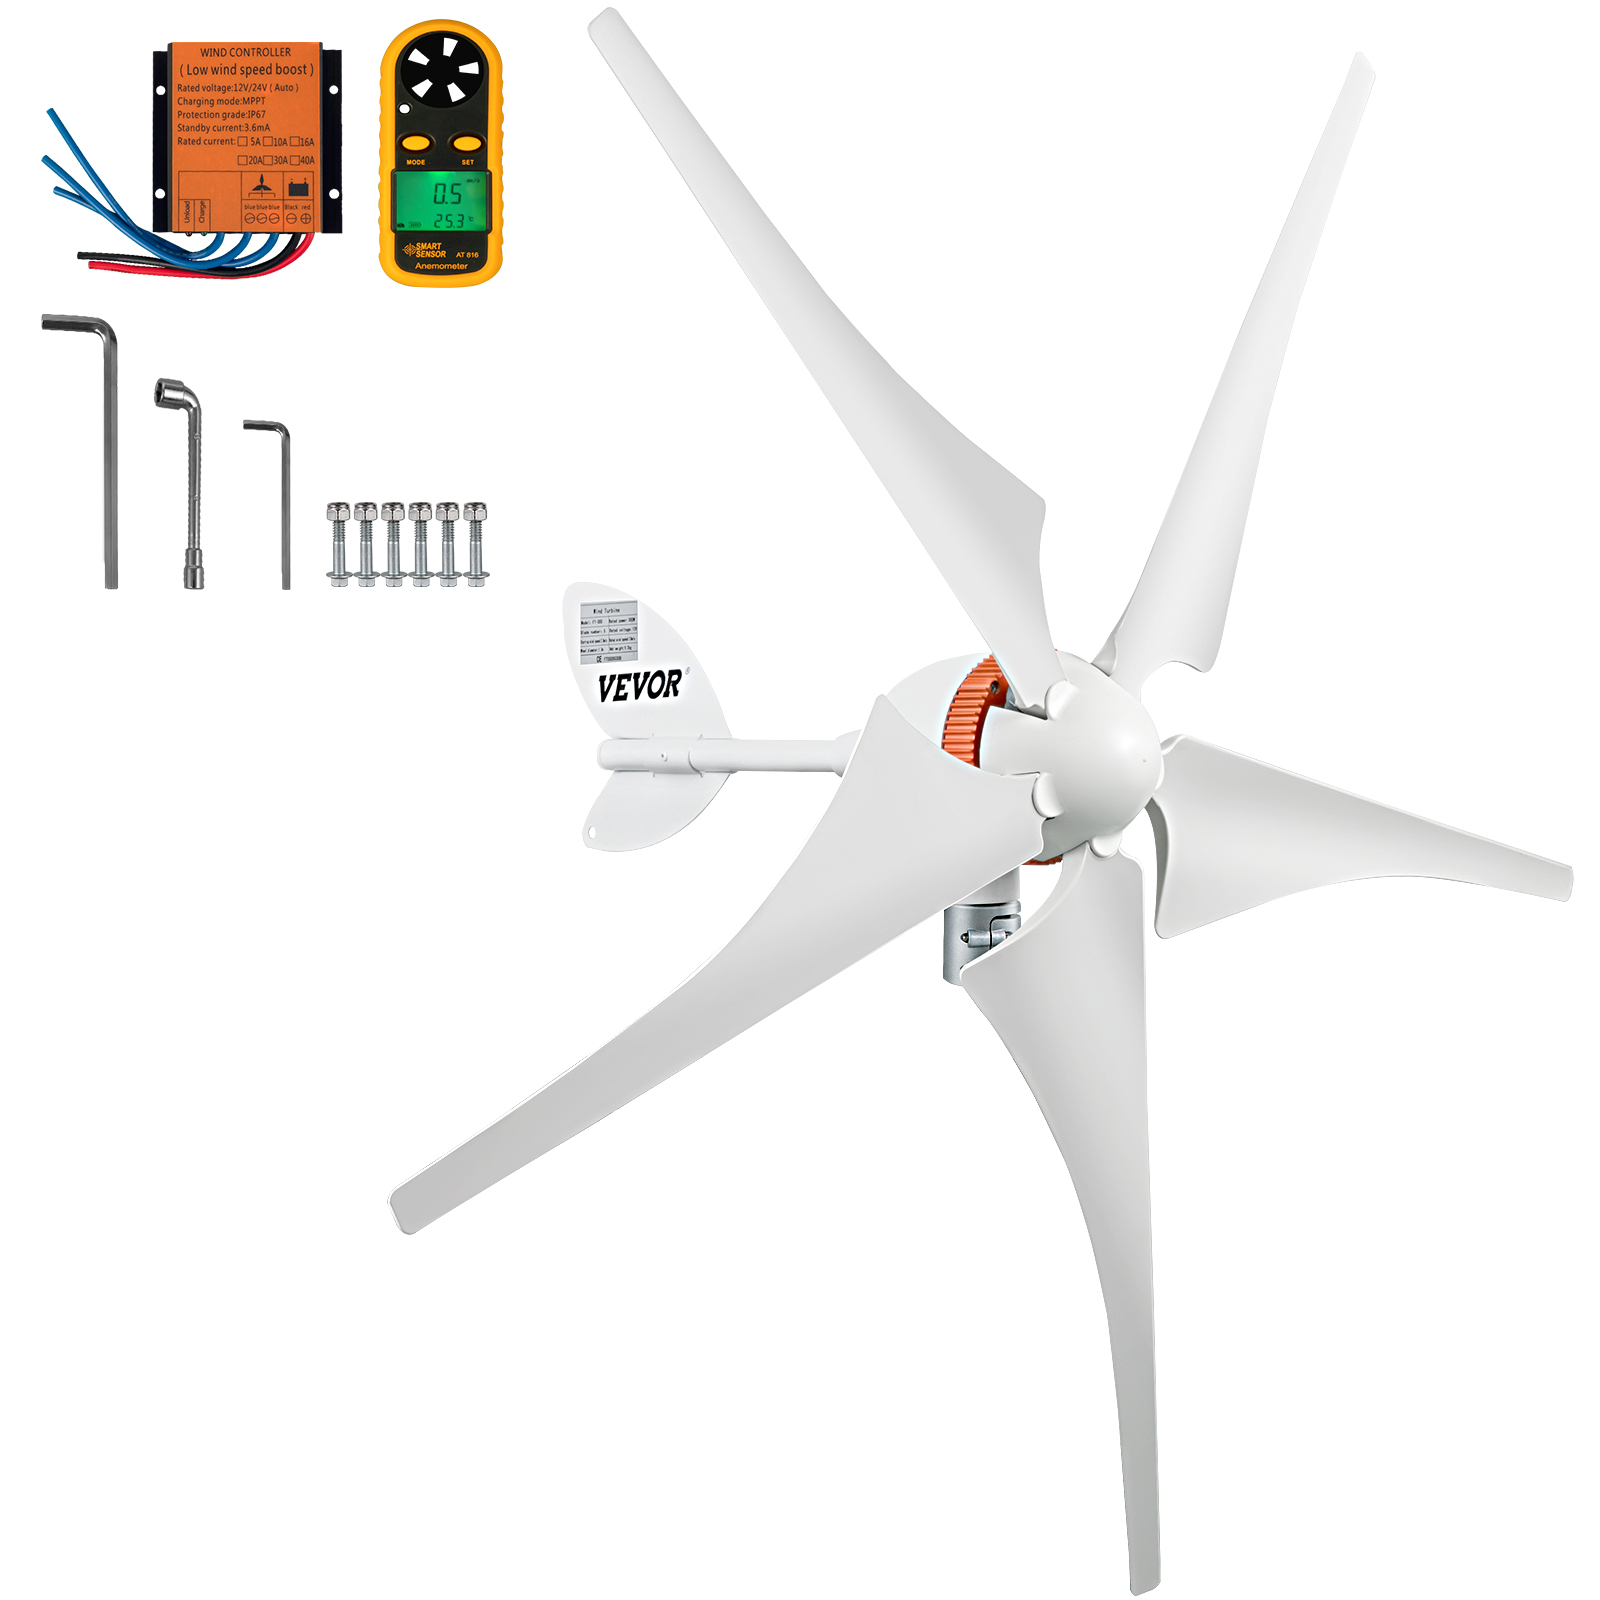 wind turbine generator,400W,12V